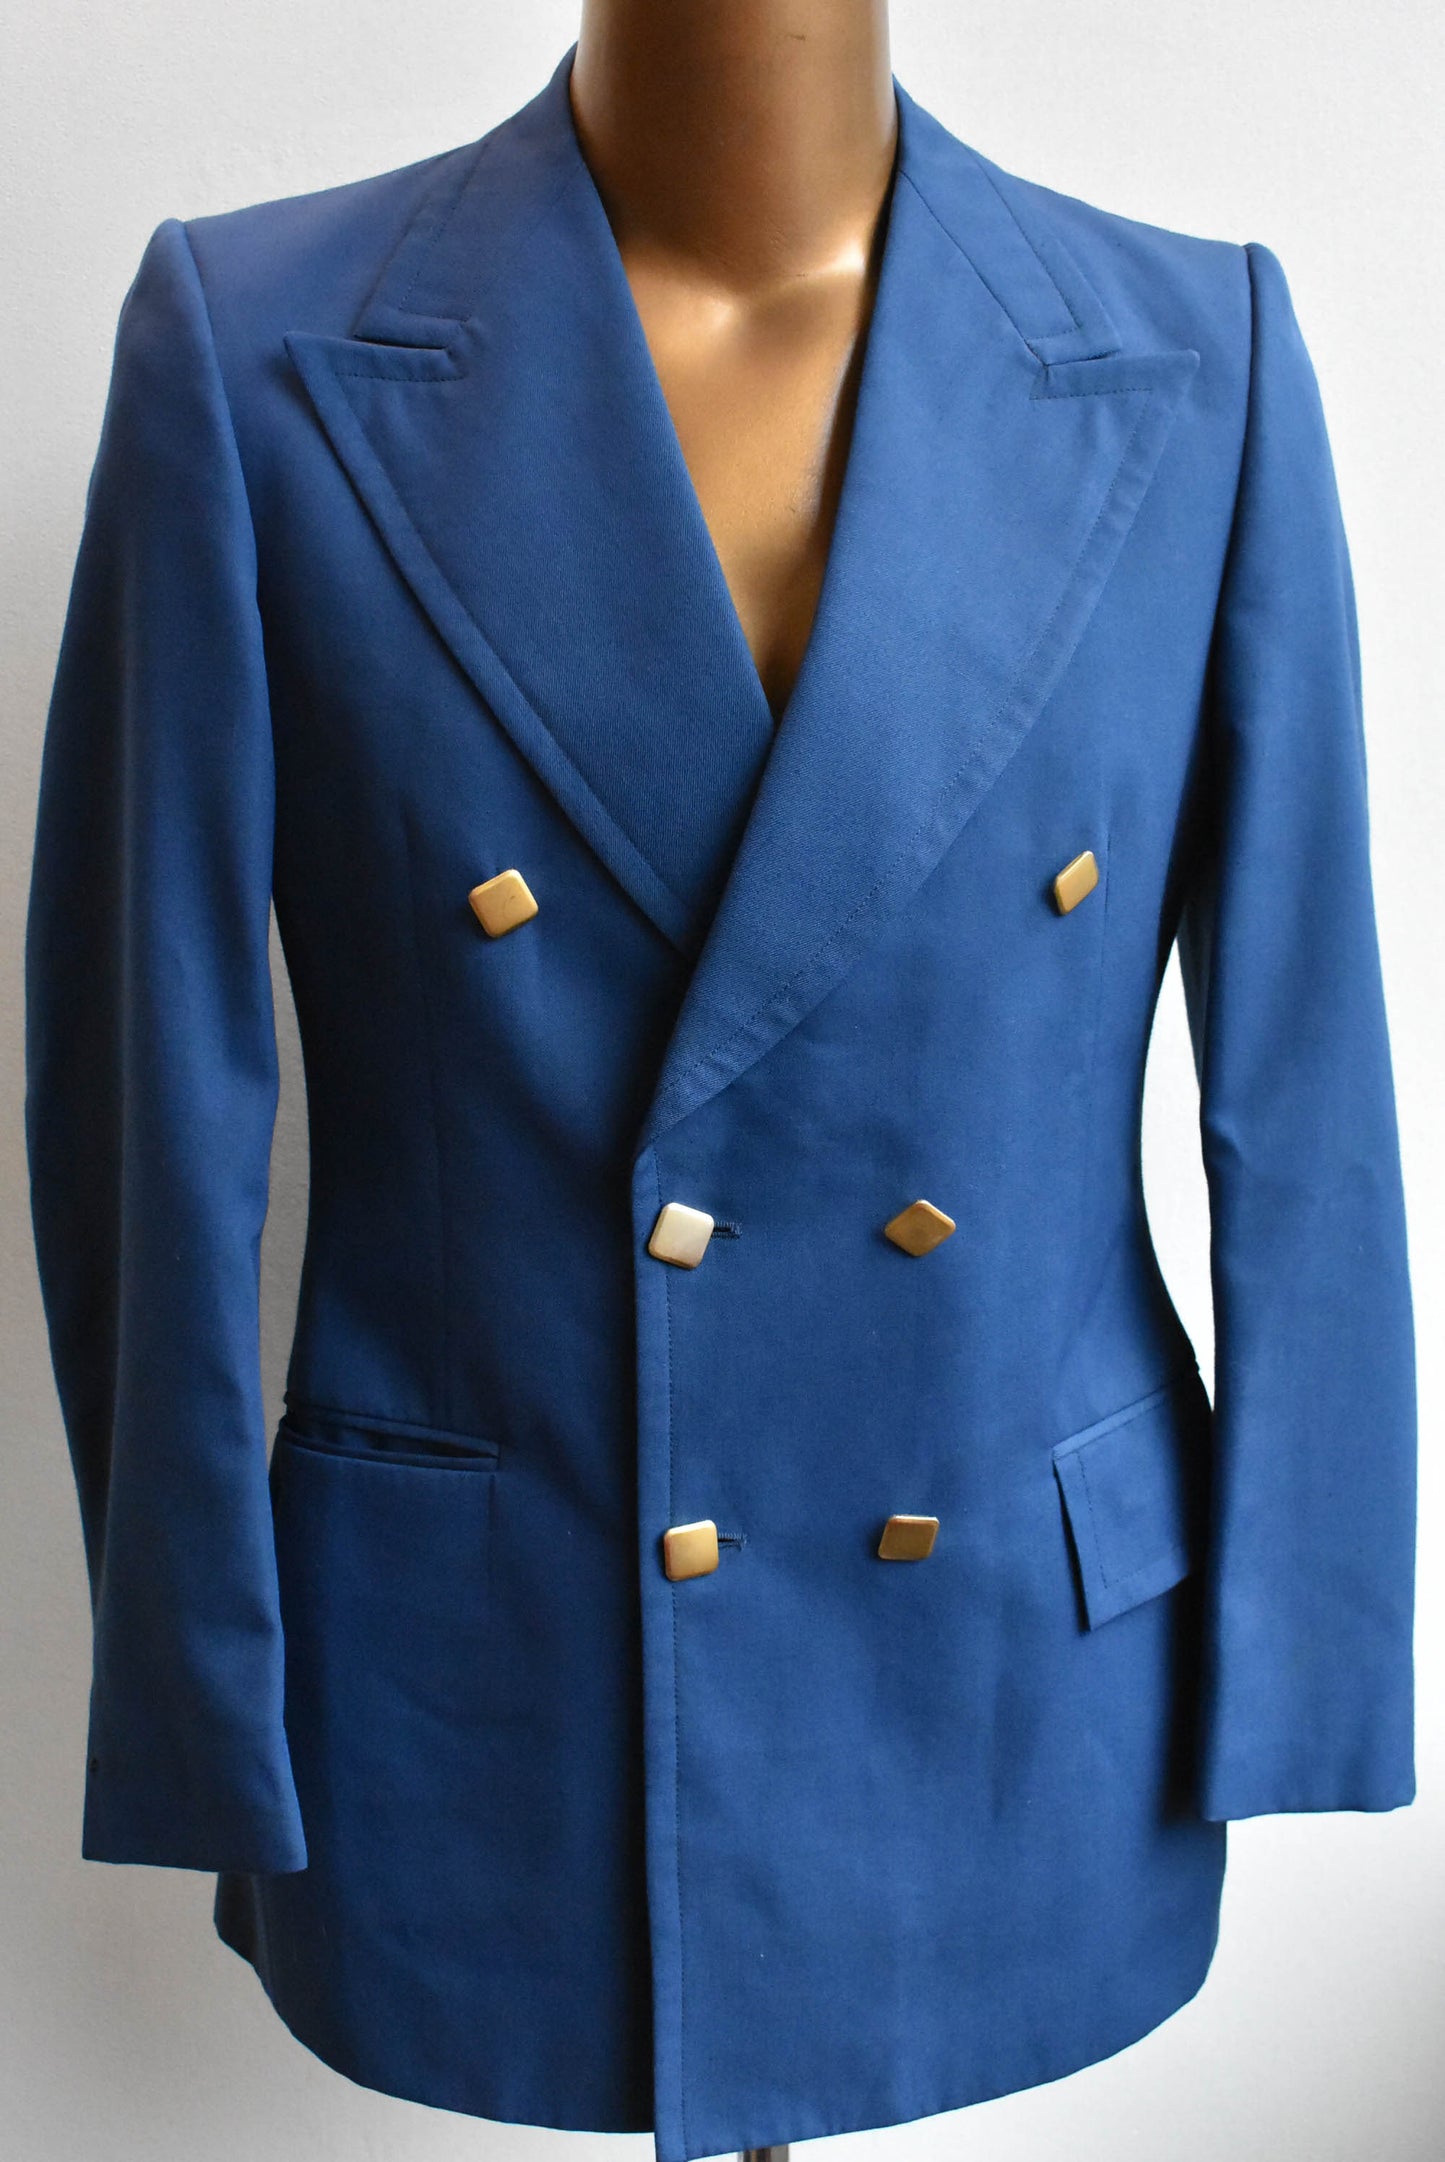 Hardy Amies retro wool-blend blue suit jacket